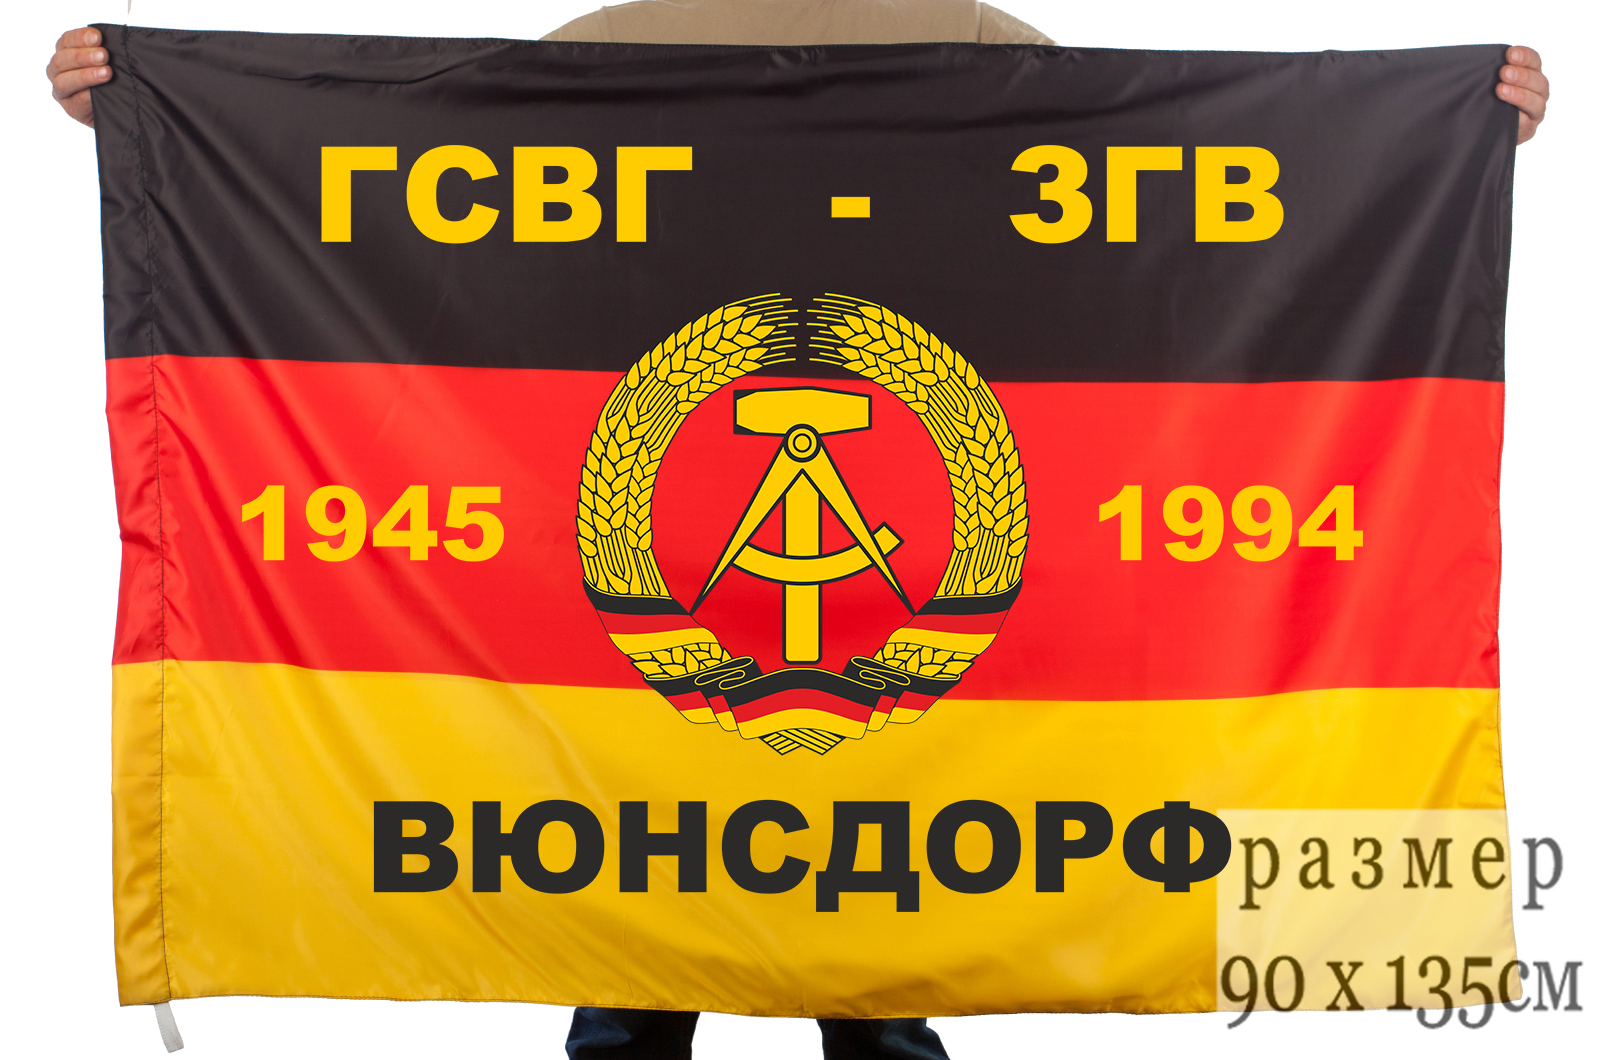 Флаг ГСВГ-ЗГВ «Вюнсдорф»